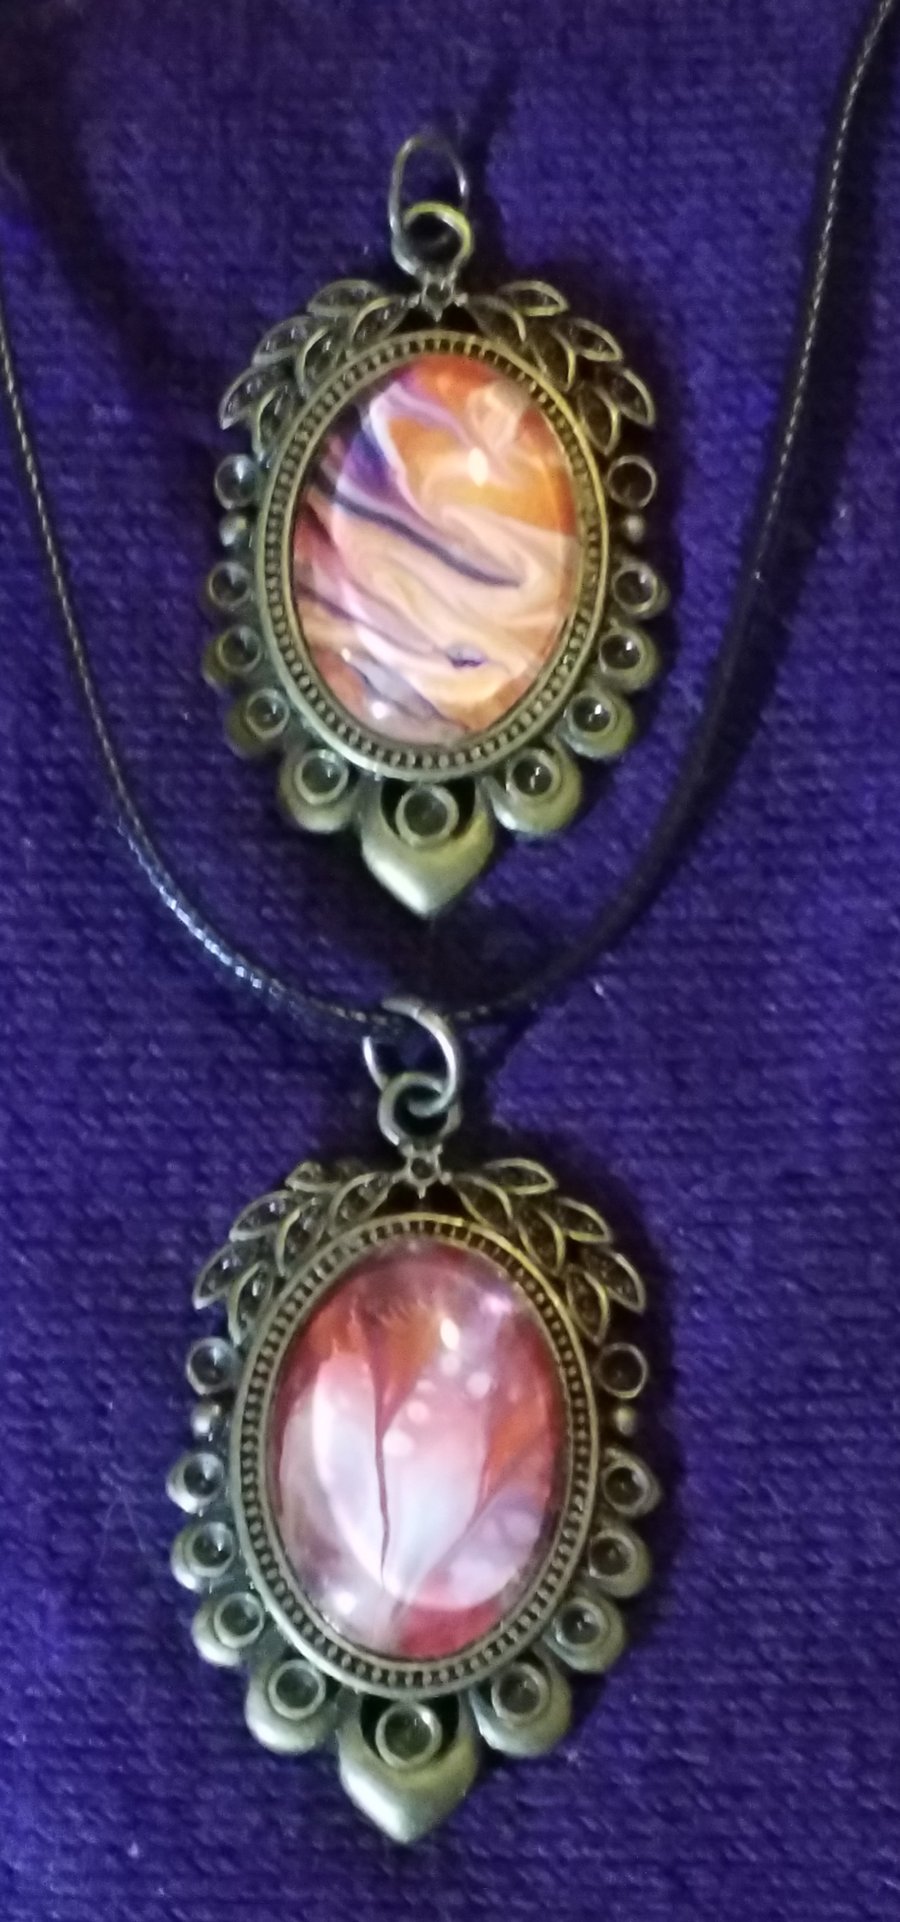 2 for 1 handmade fluid art pendants. Red, orange, white and purple